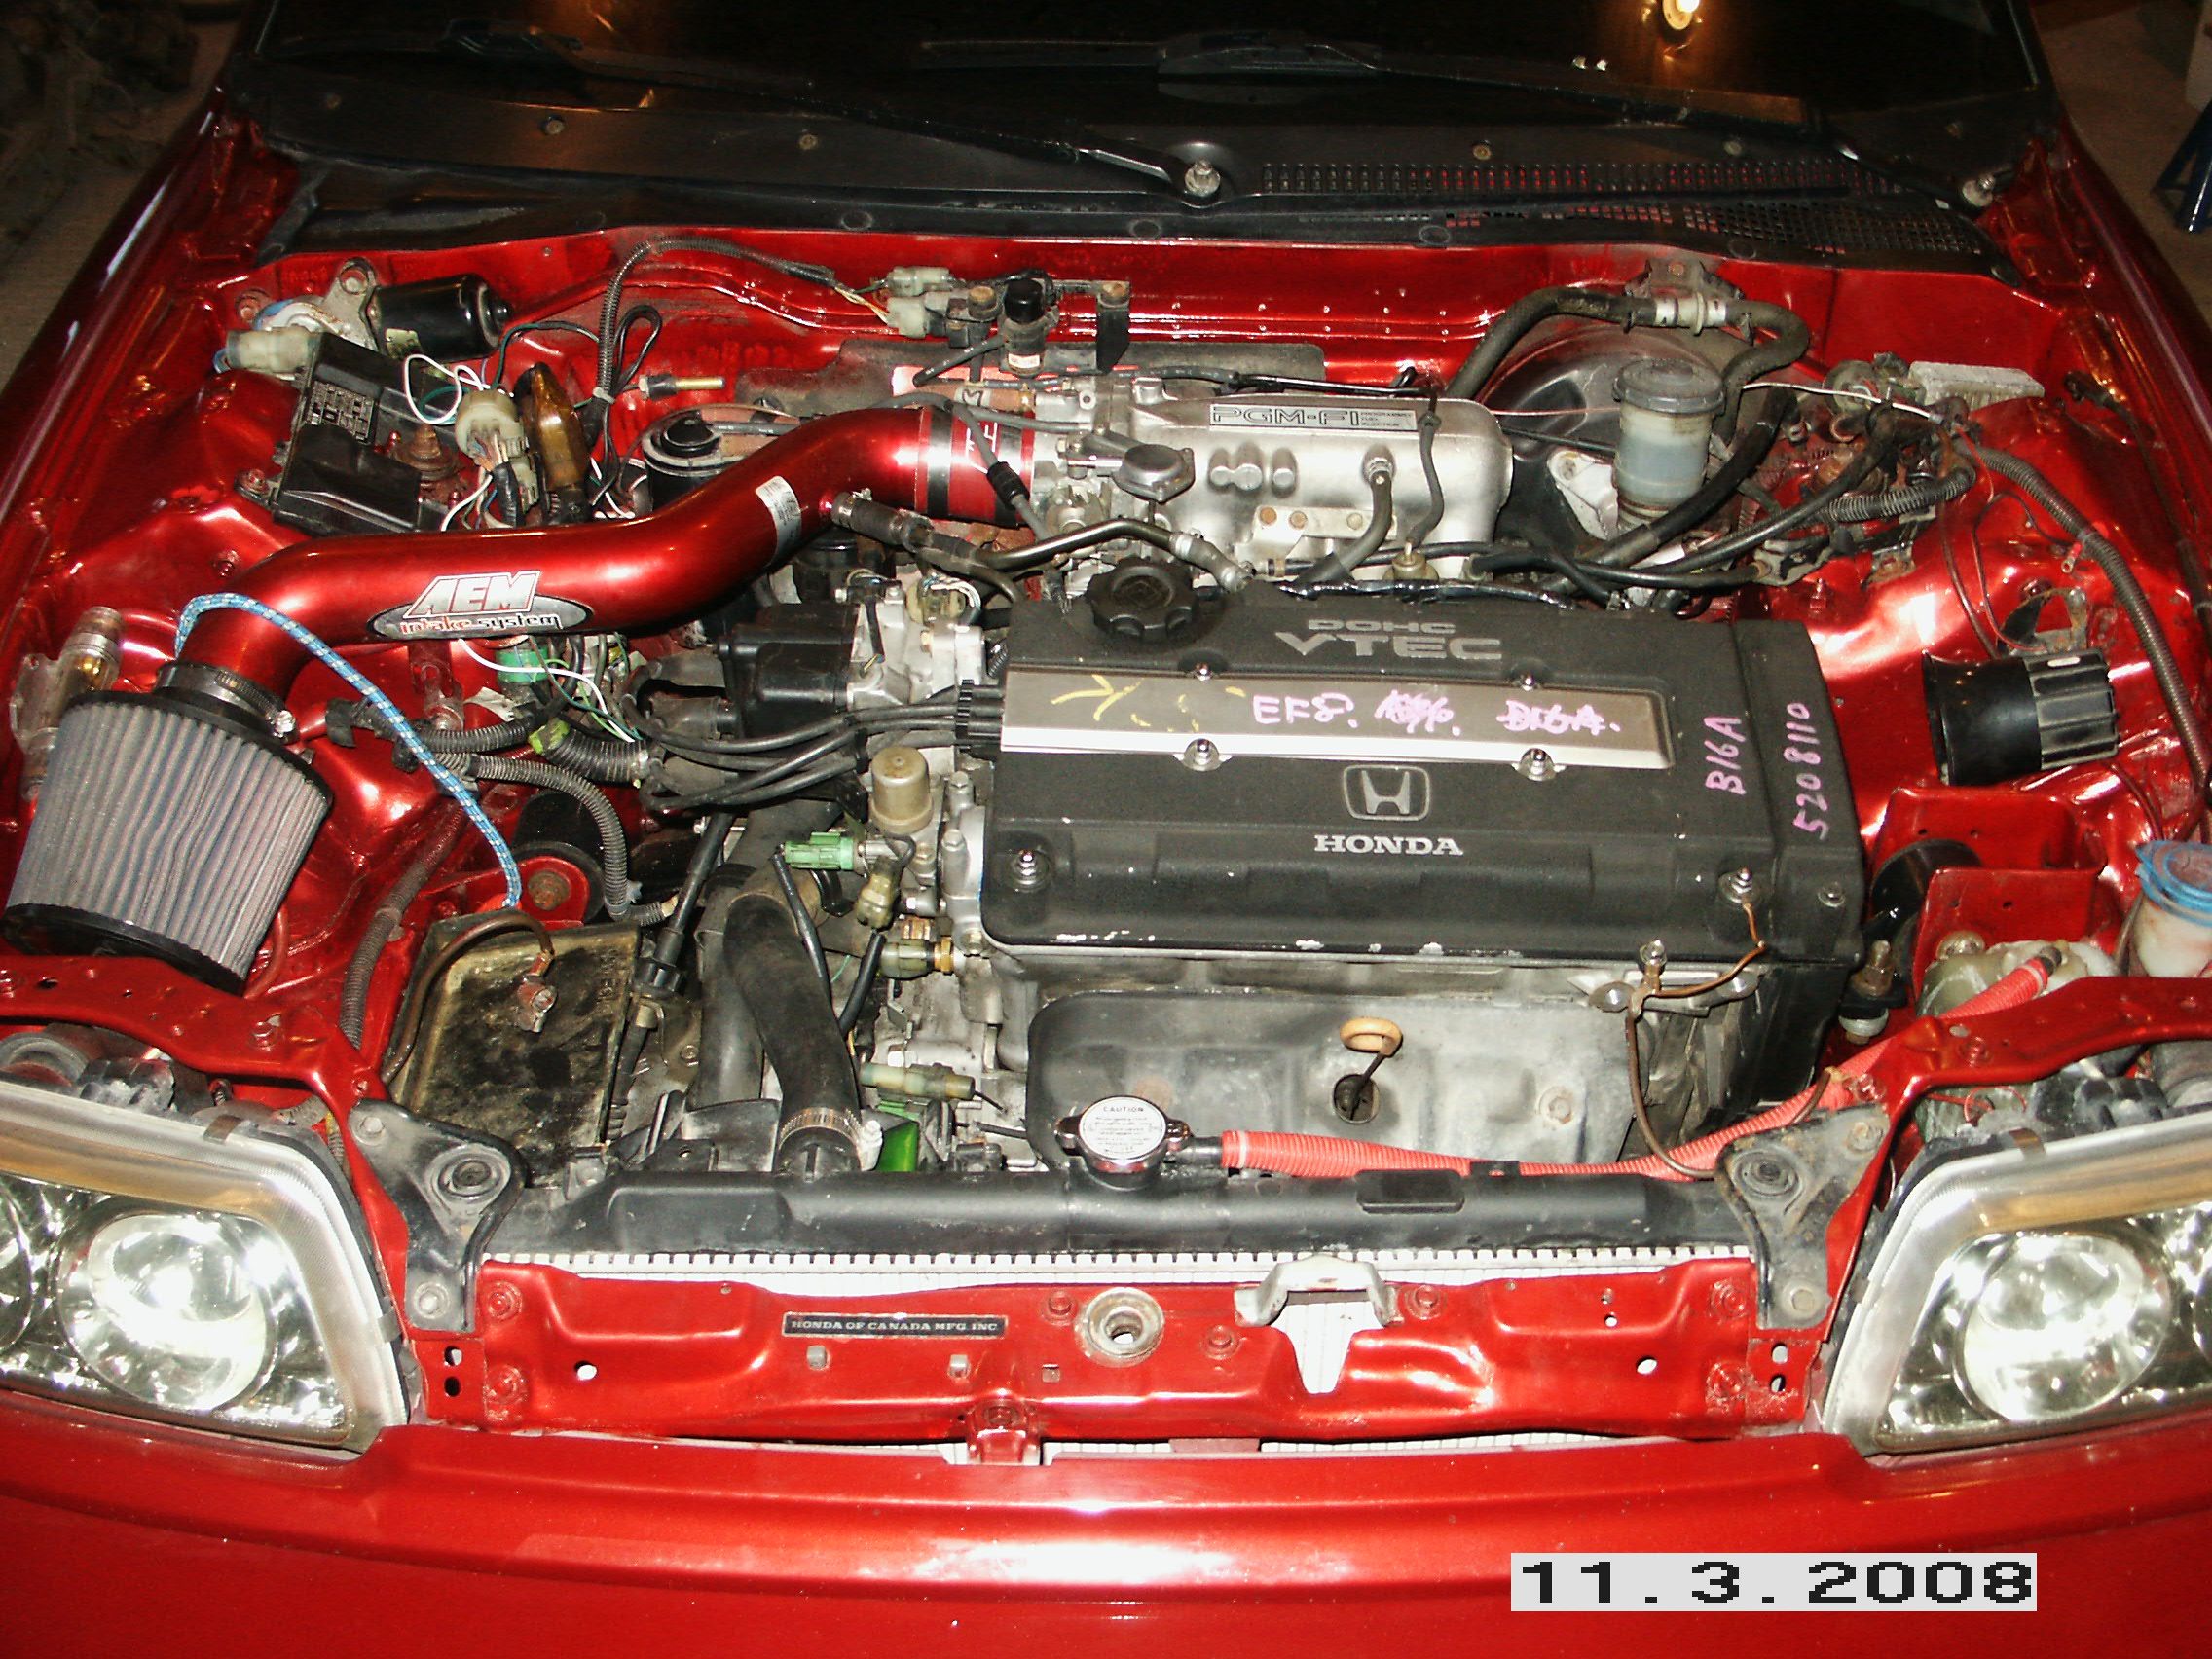 NEw engine B16a1